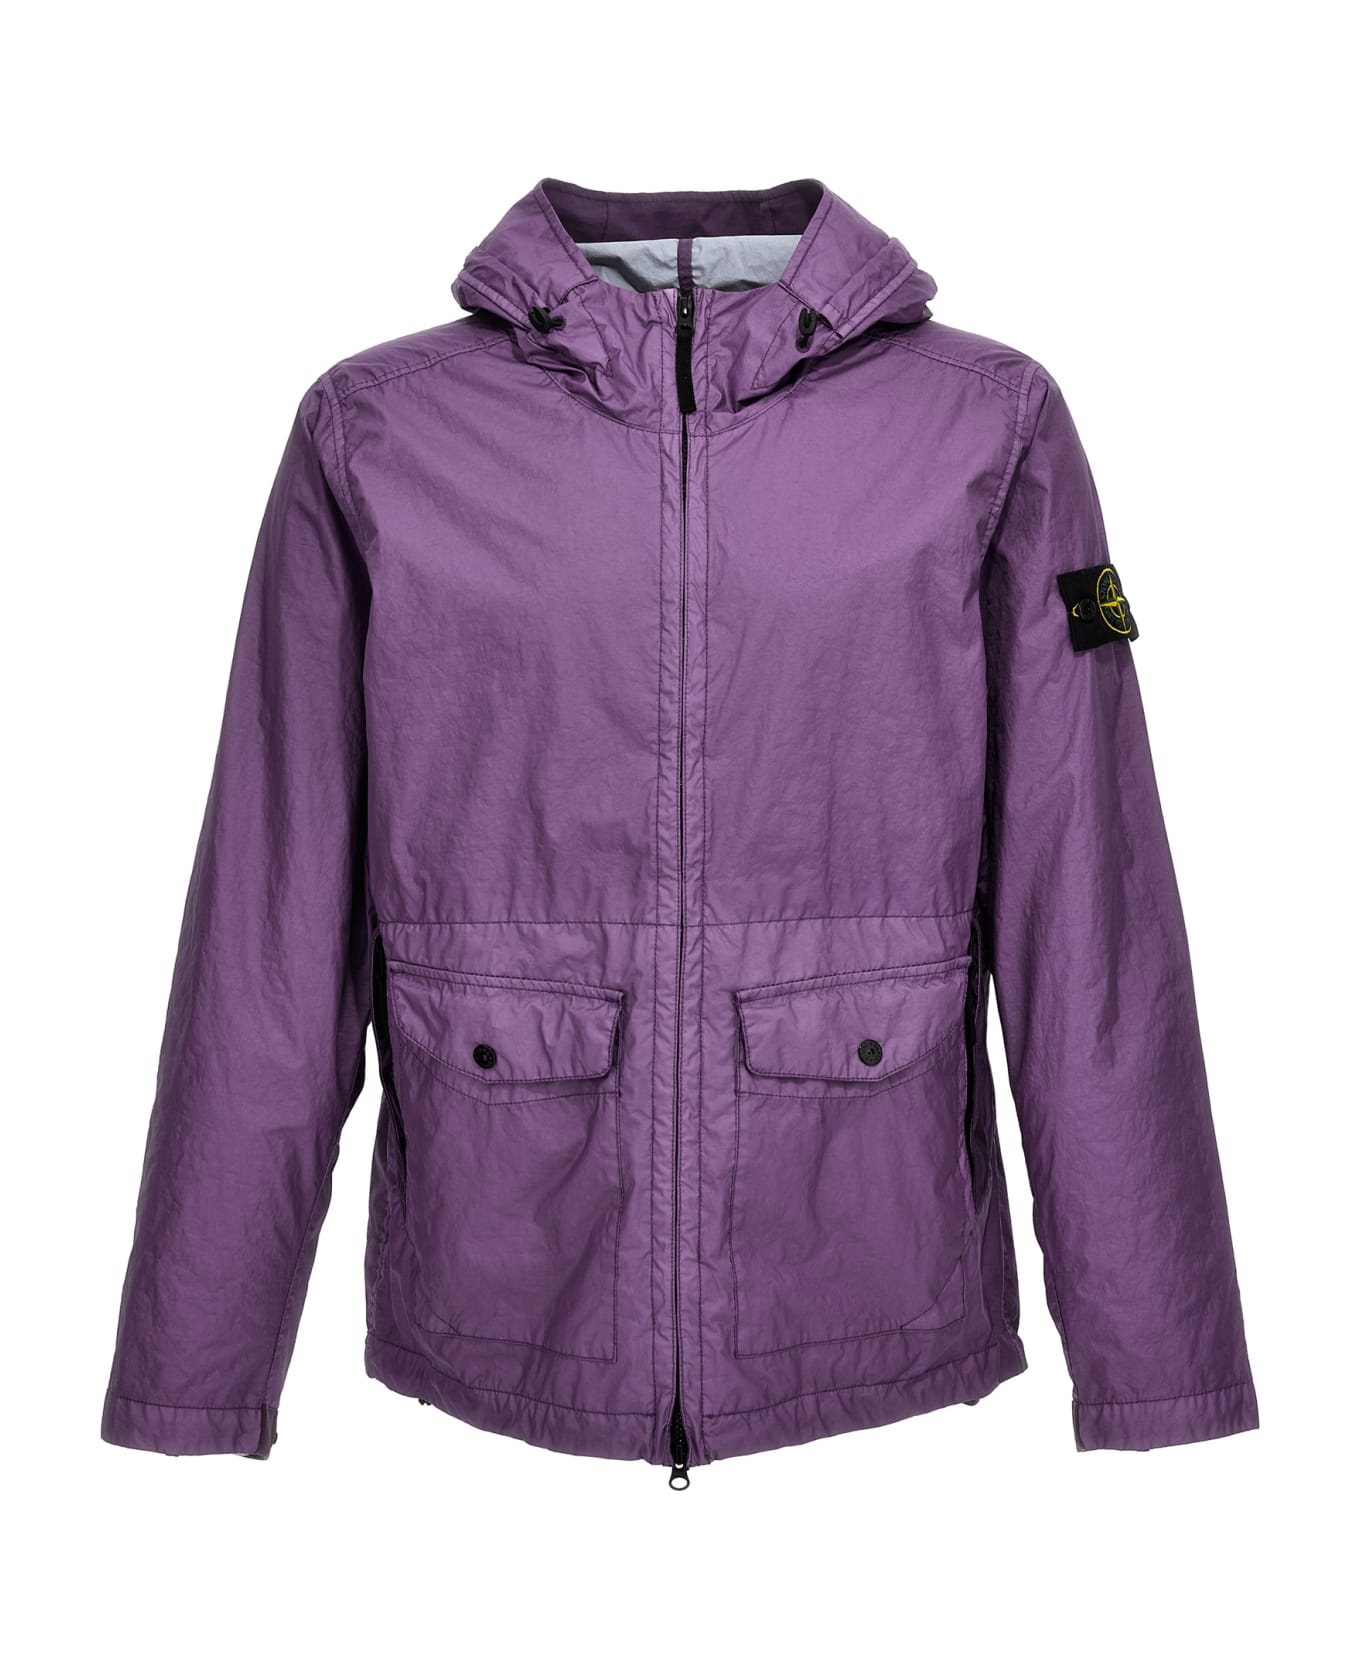 Stone Island Membrana 3l Tc Zipped Hooded Jacket - Purple